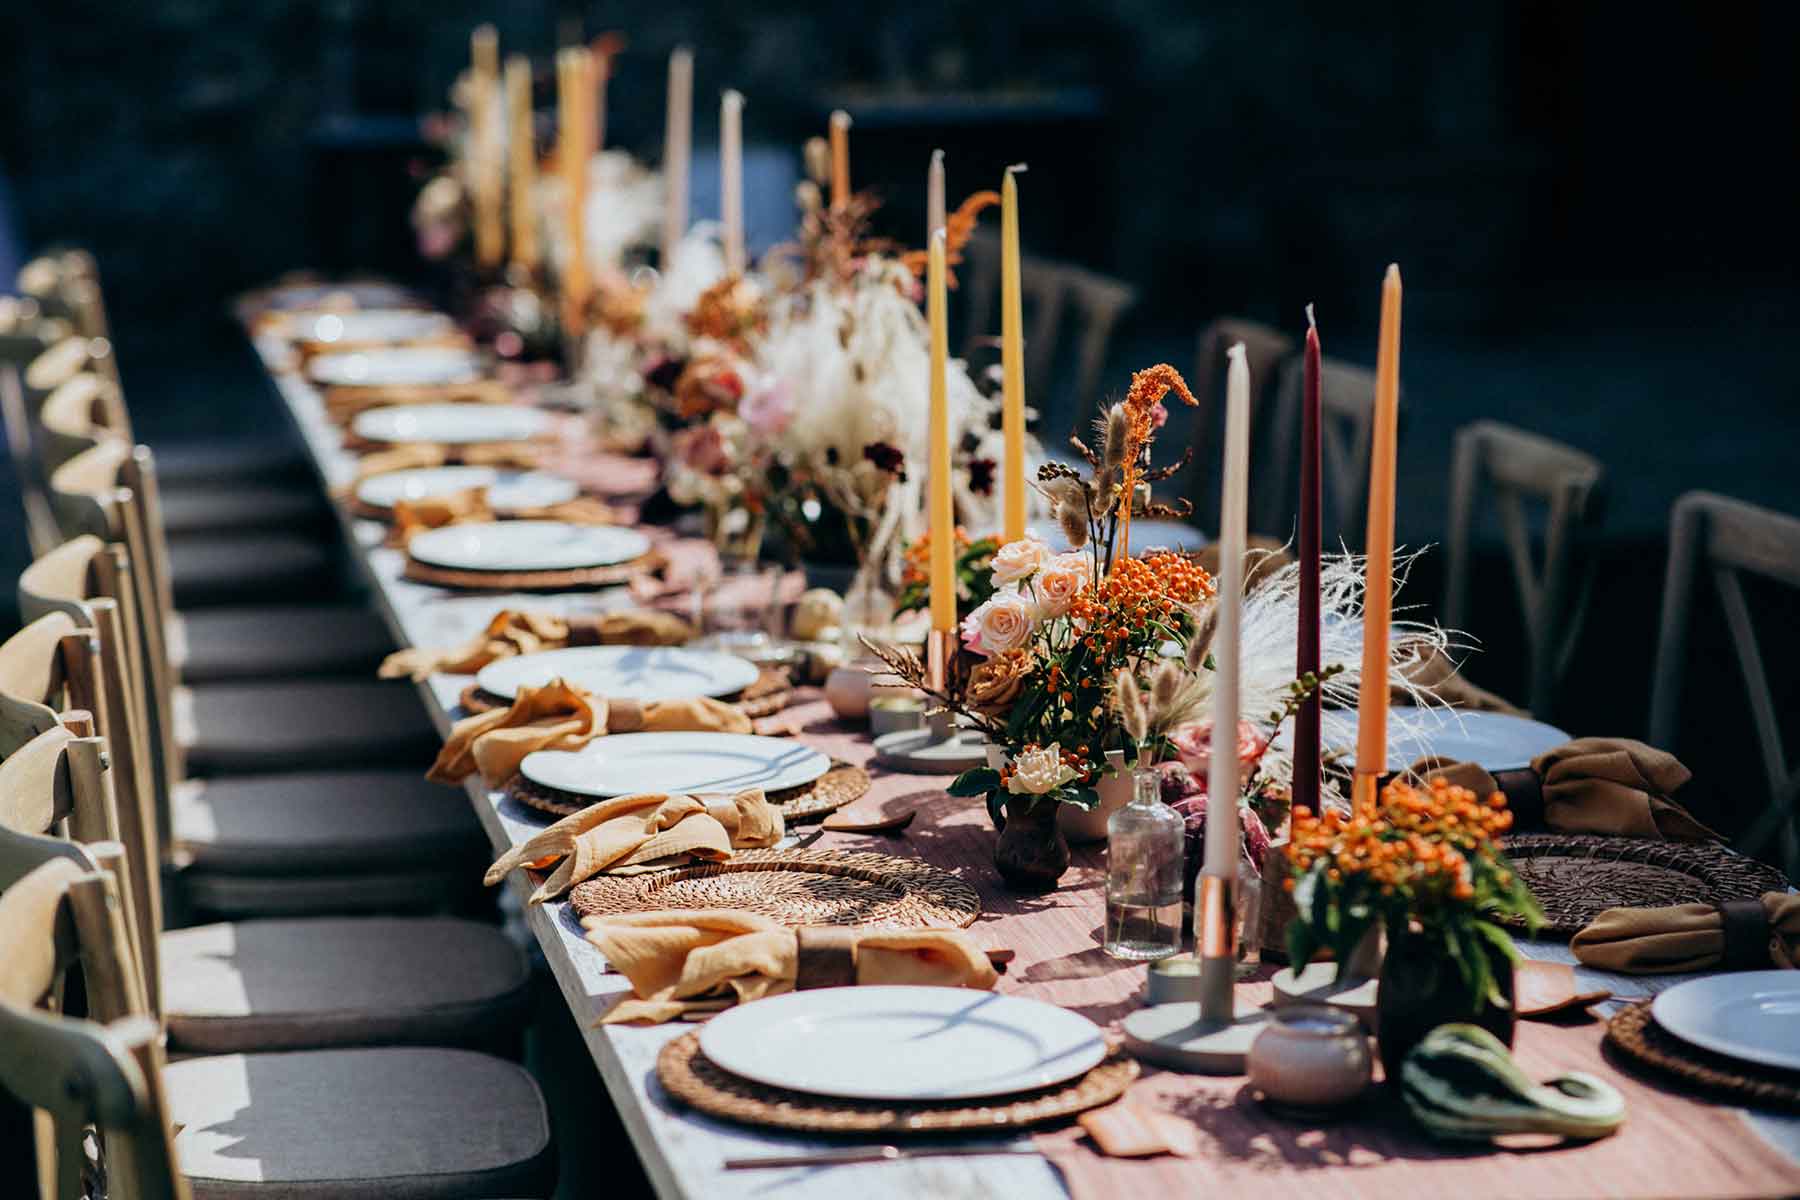 35 Fall Centerpiece Ideas for Your Wedding to Let the Season Shine - Joy